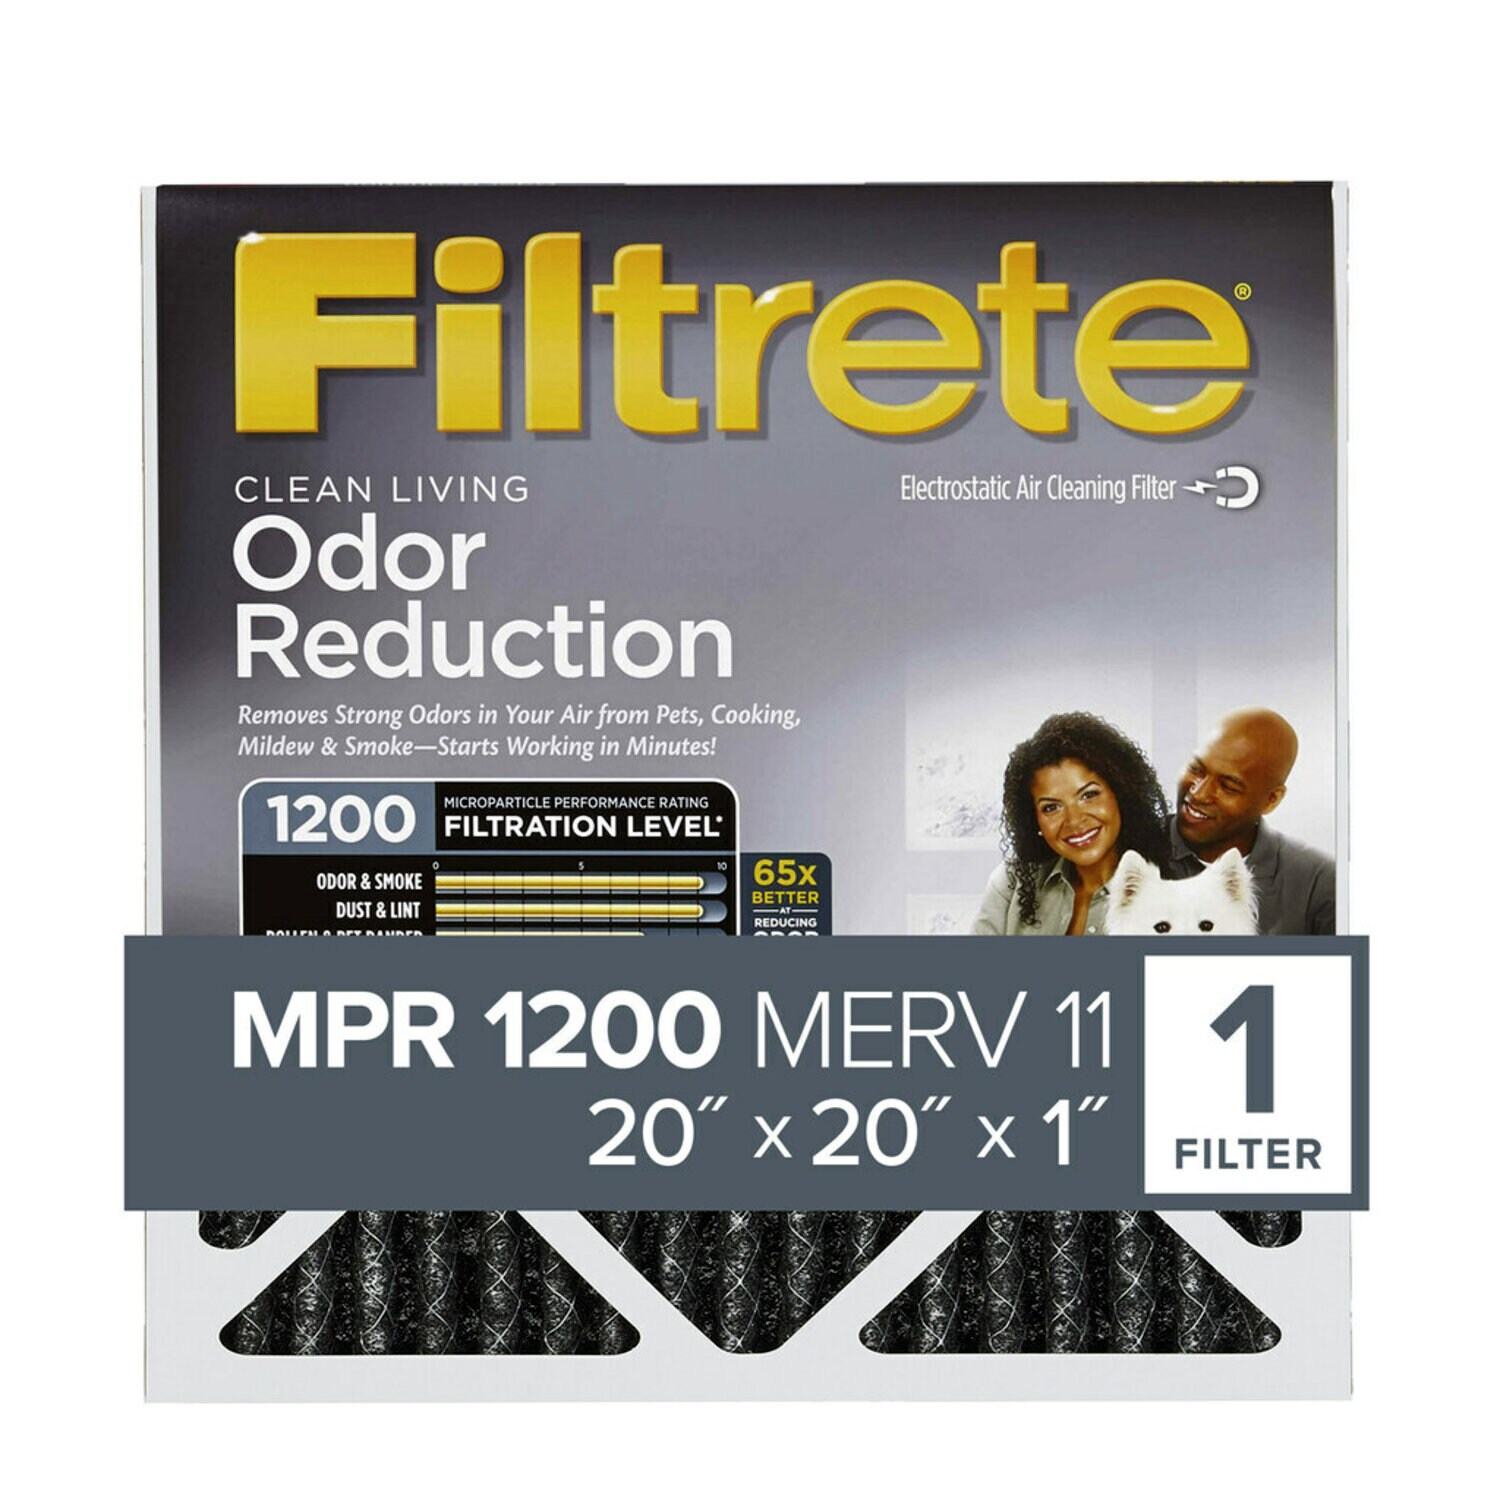 7010273563 - Filtrete Home Odor Reduction Filter HOME02-4, 20 in x 20 in x 1 in
(50,8 cm x 50,8 cm x 2,5 cm)